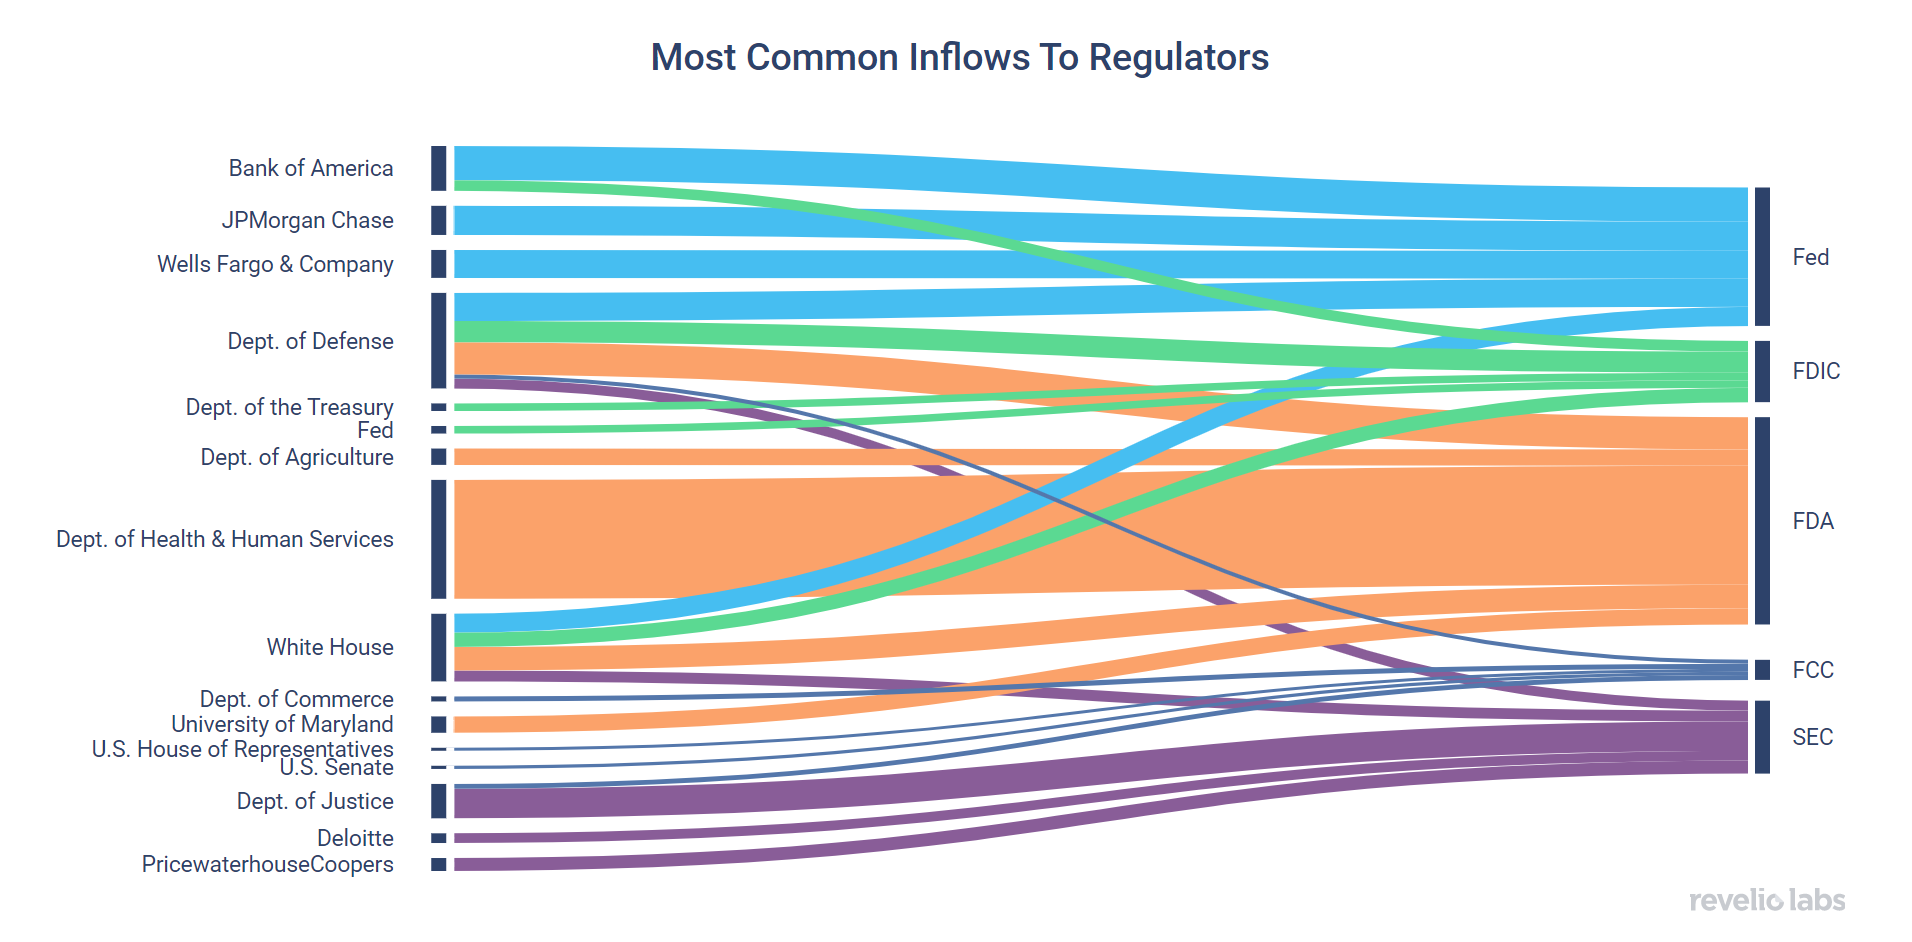 Most Common Inflows to Regulators